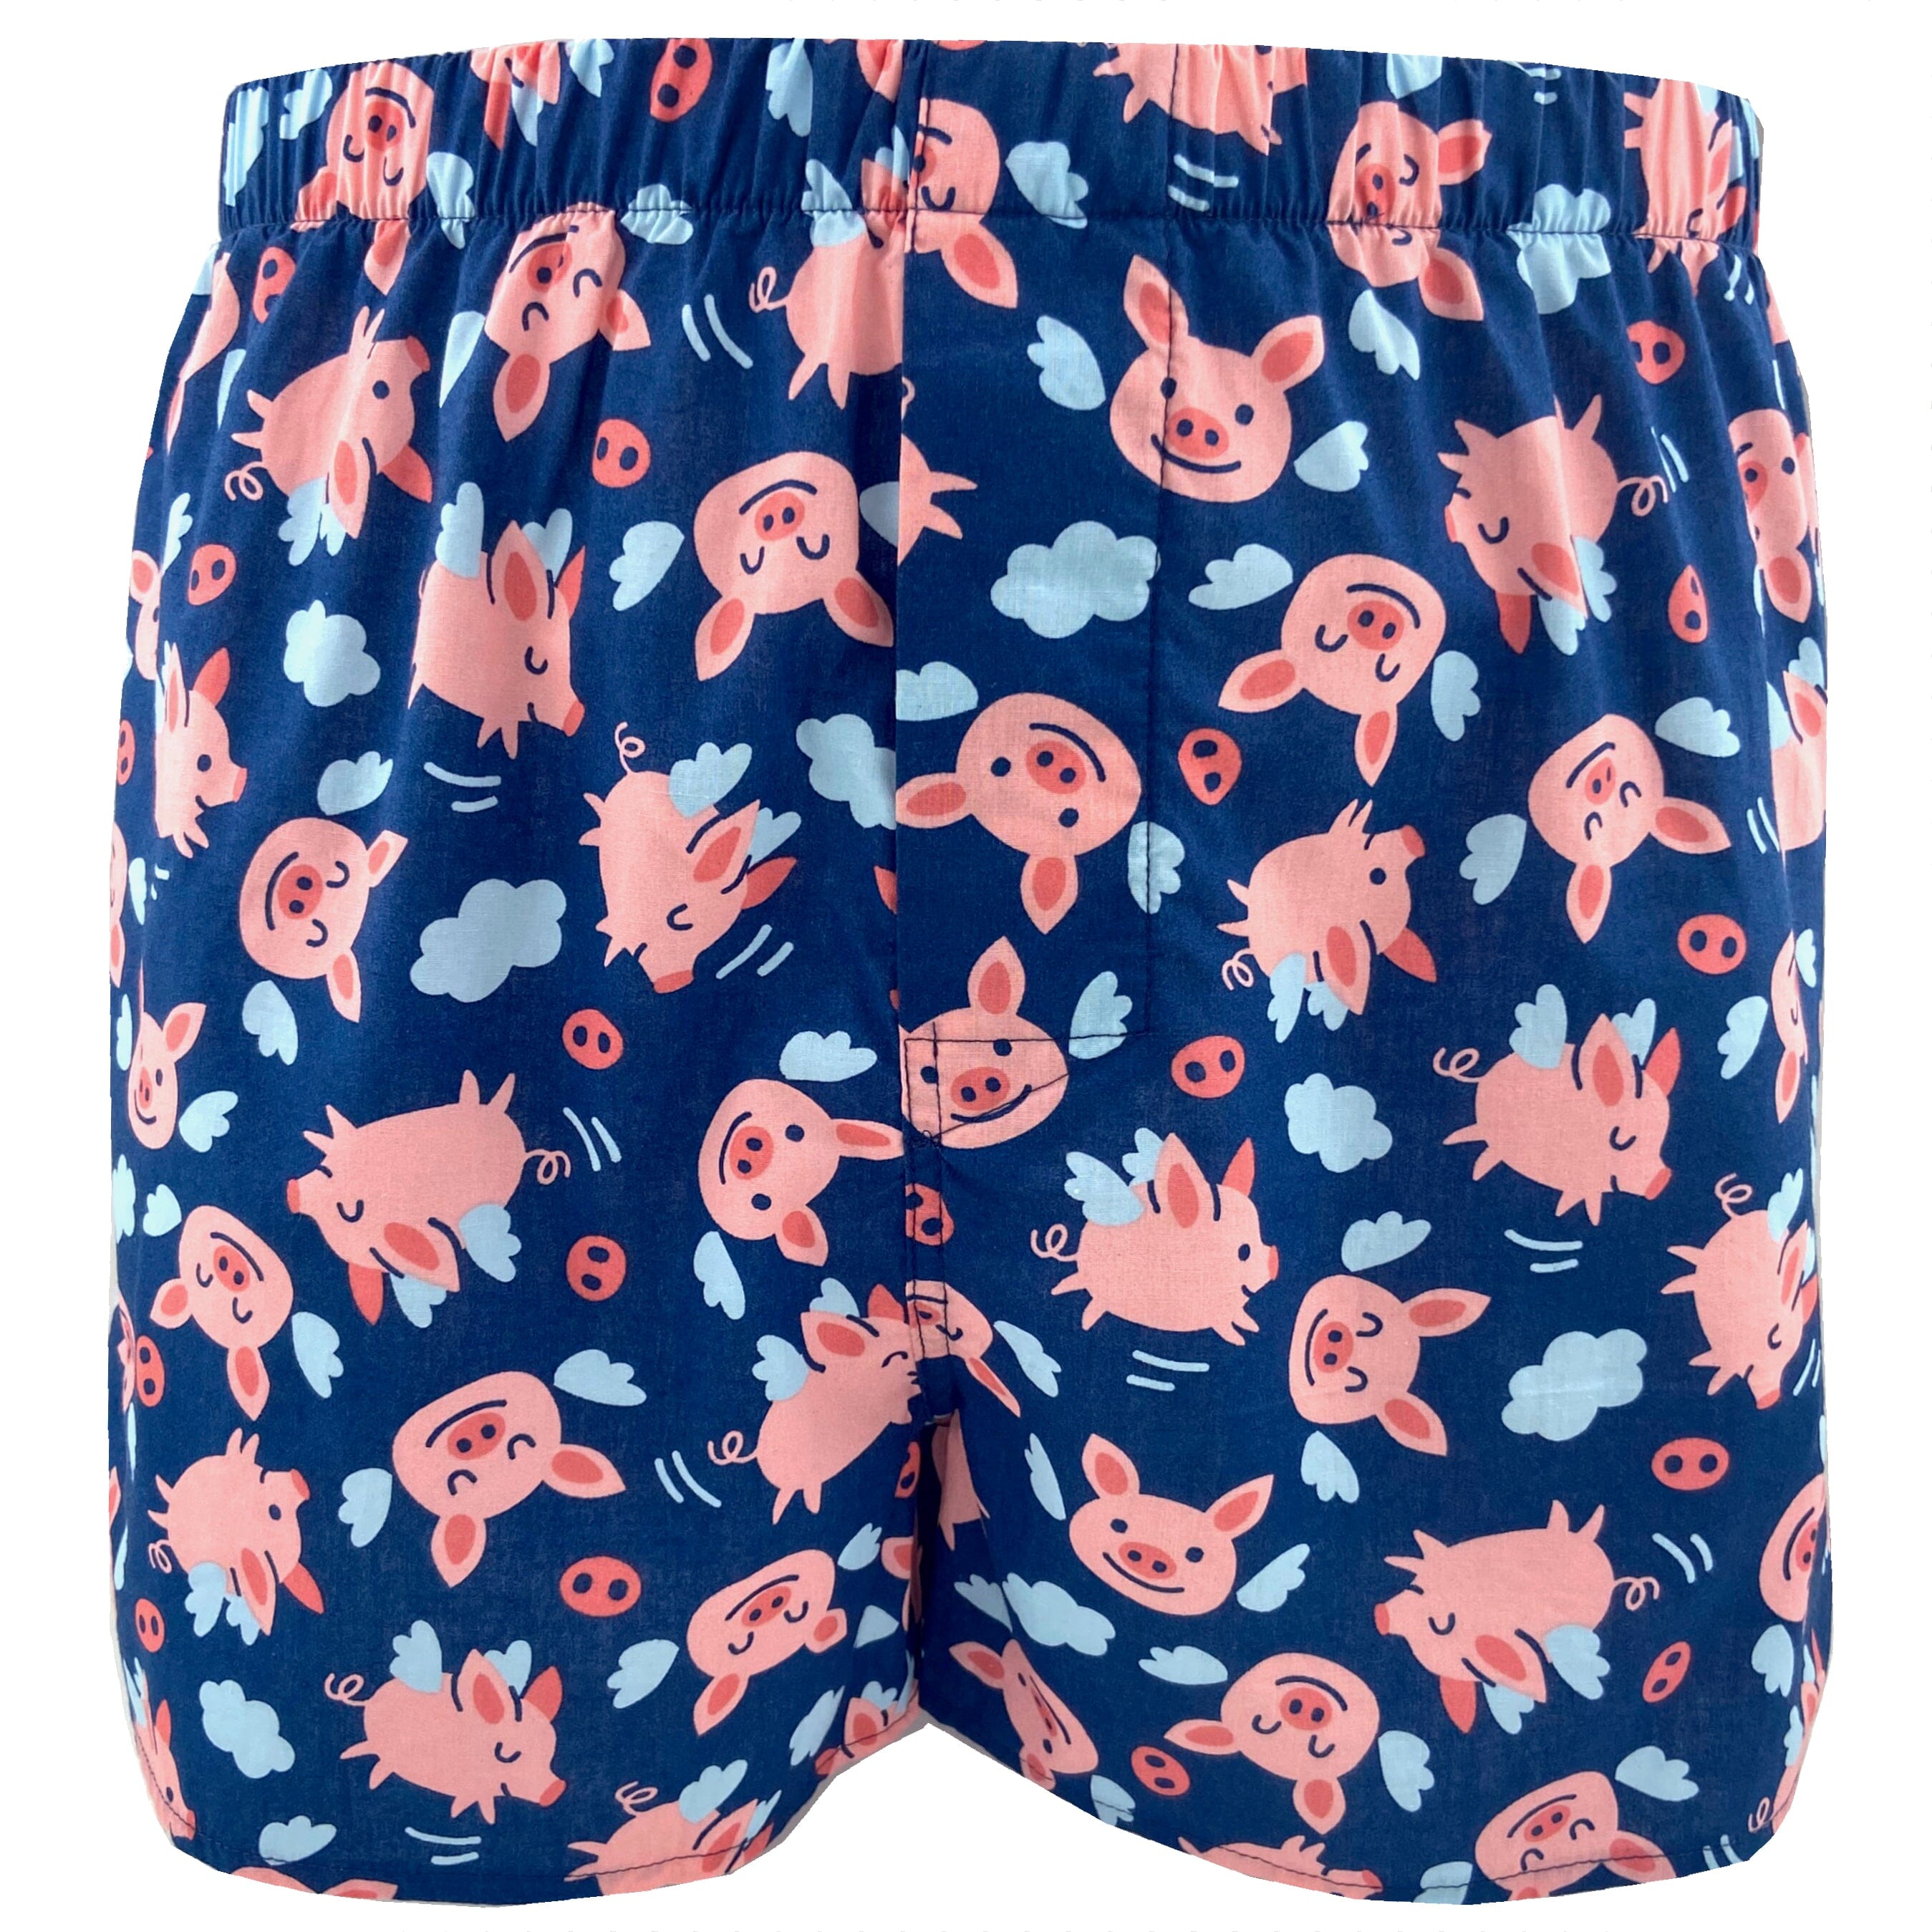  Funny Underwear for Men Pig Cute Underwear for Men